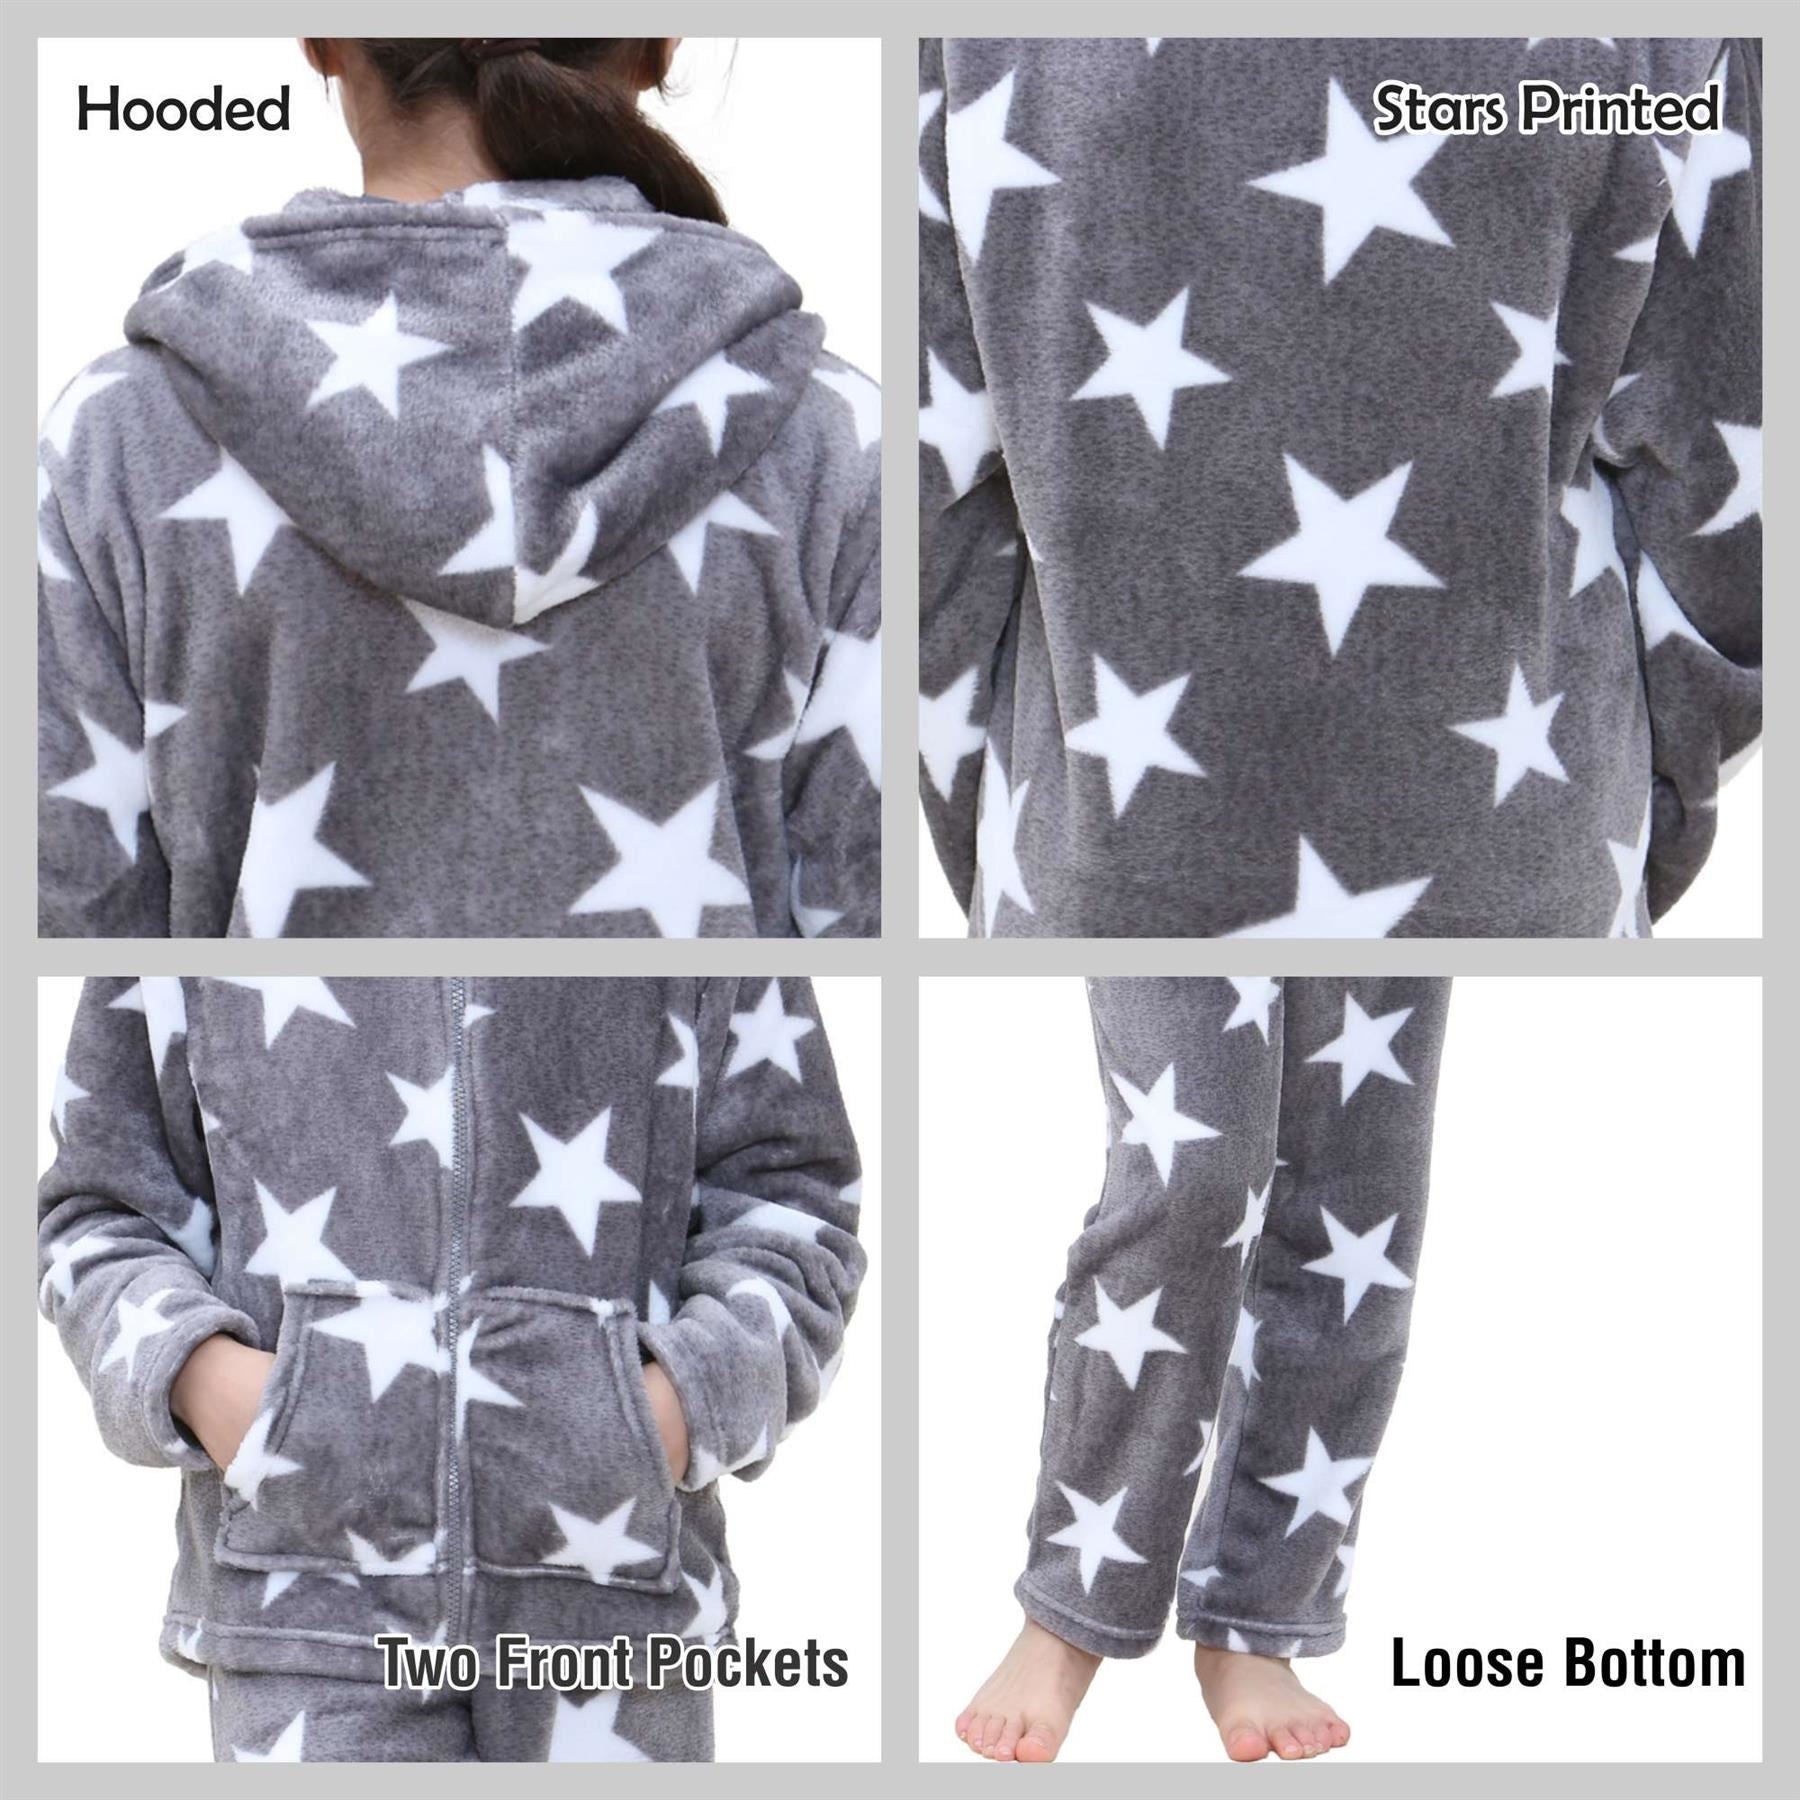 Kids Girls Stars Print Grey Zipped Pyjama Extra Soft Hooded Flannel Fleece PJS Set